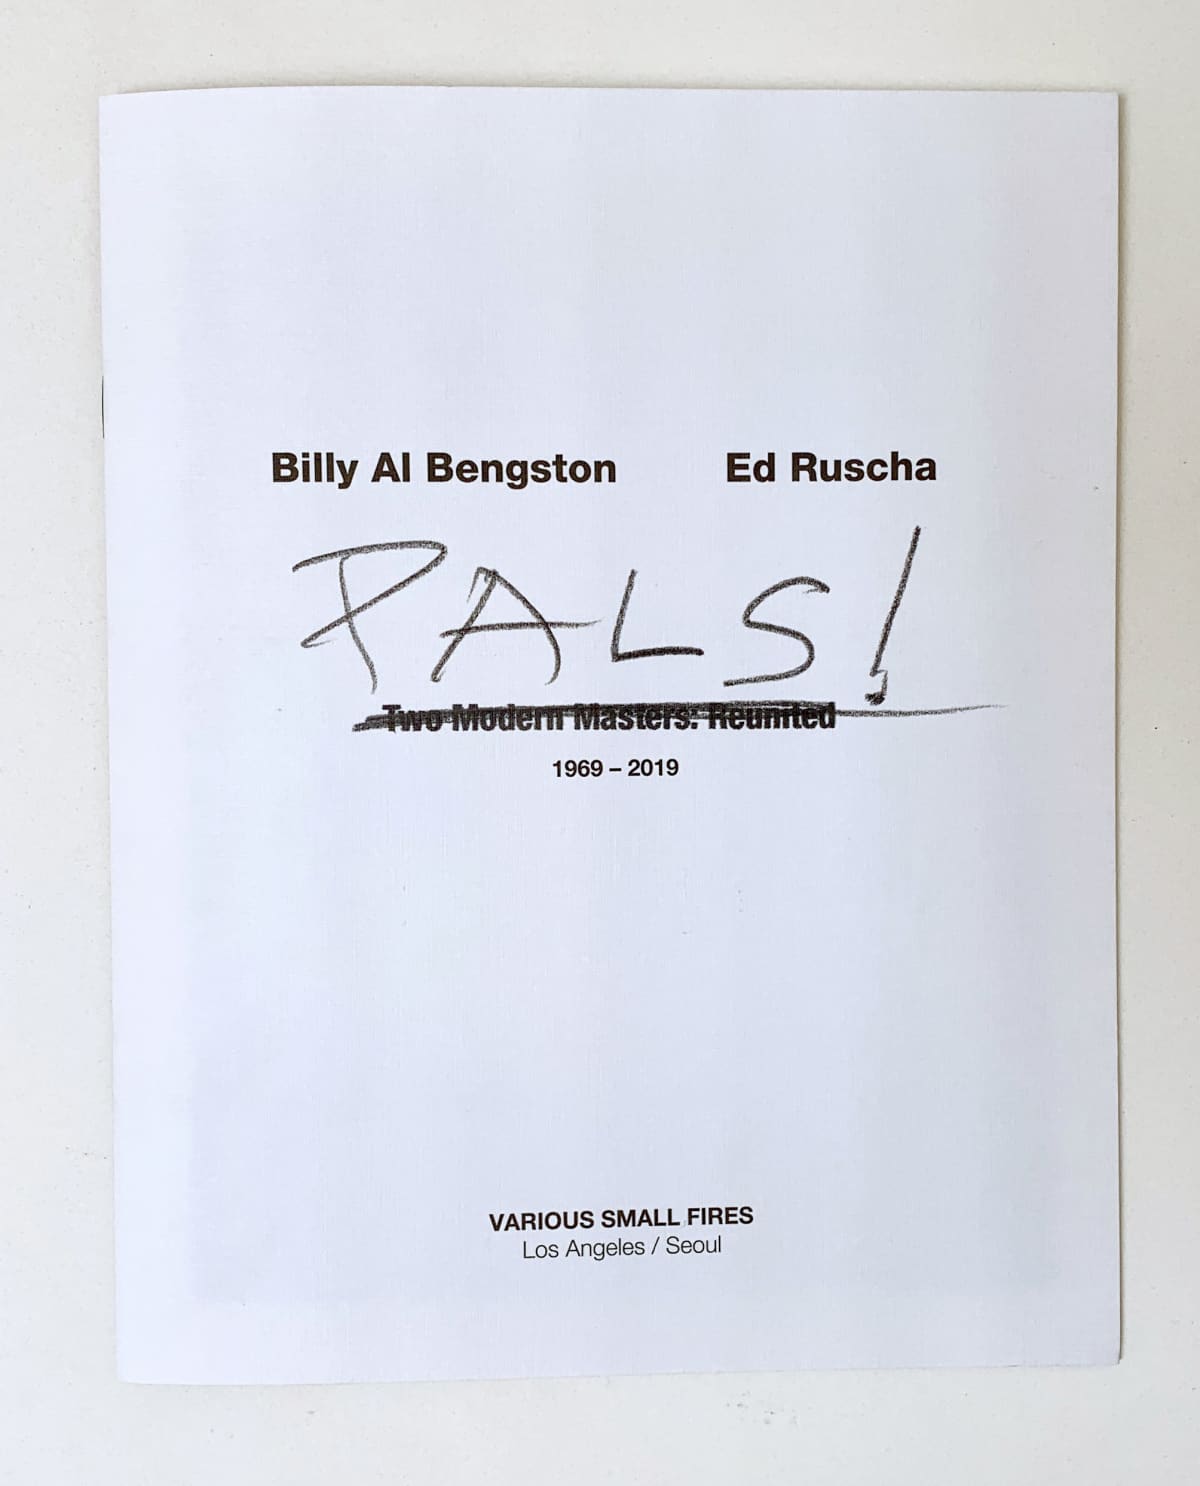 Billy Al Bengston & Ed Ruscha: Reunited